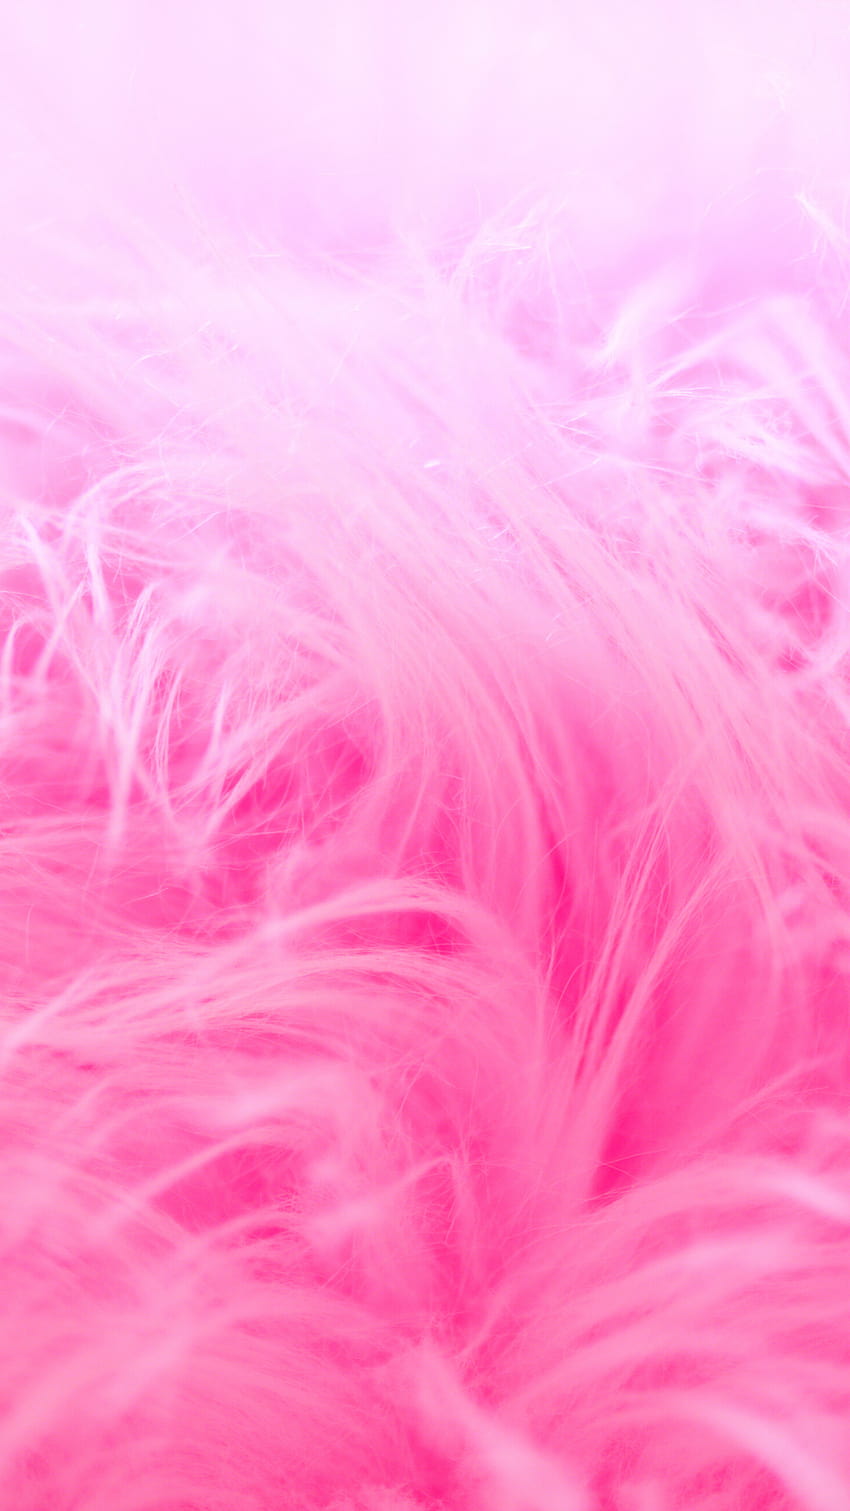 Fuzzy background Stock Photos Royalty Free Fuzzy background Images   Depositphotos